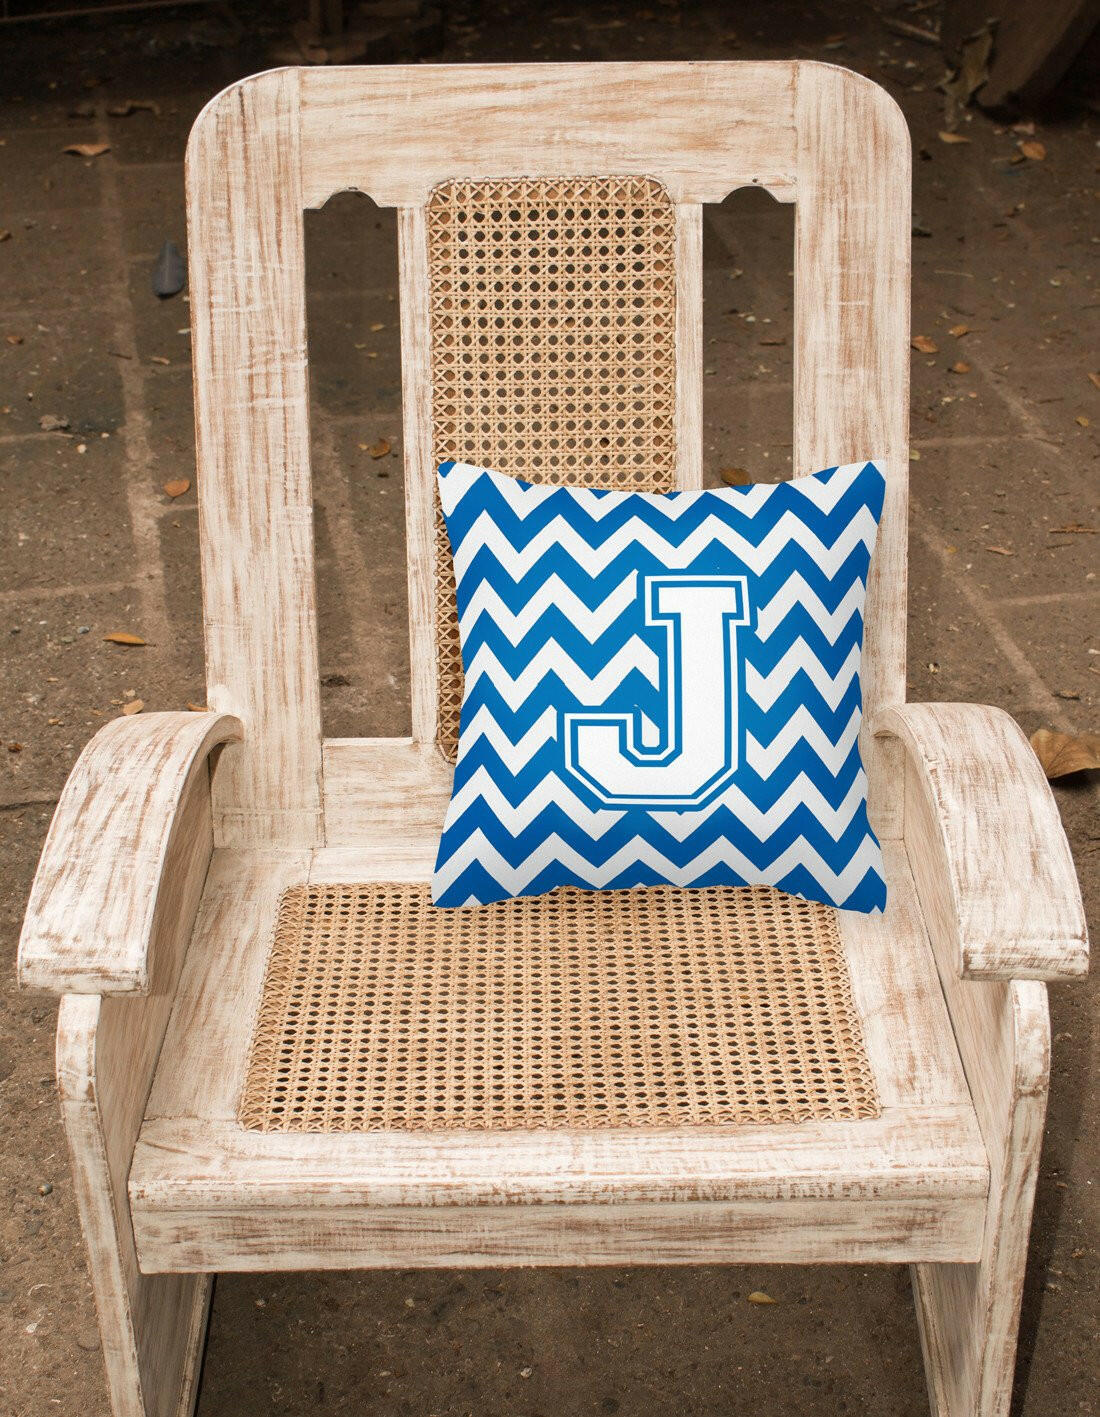 Letter J Chevron Blue and White Fabric Decorative Pillow CJ1045-JPW1414 by Caroline's Treasures